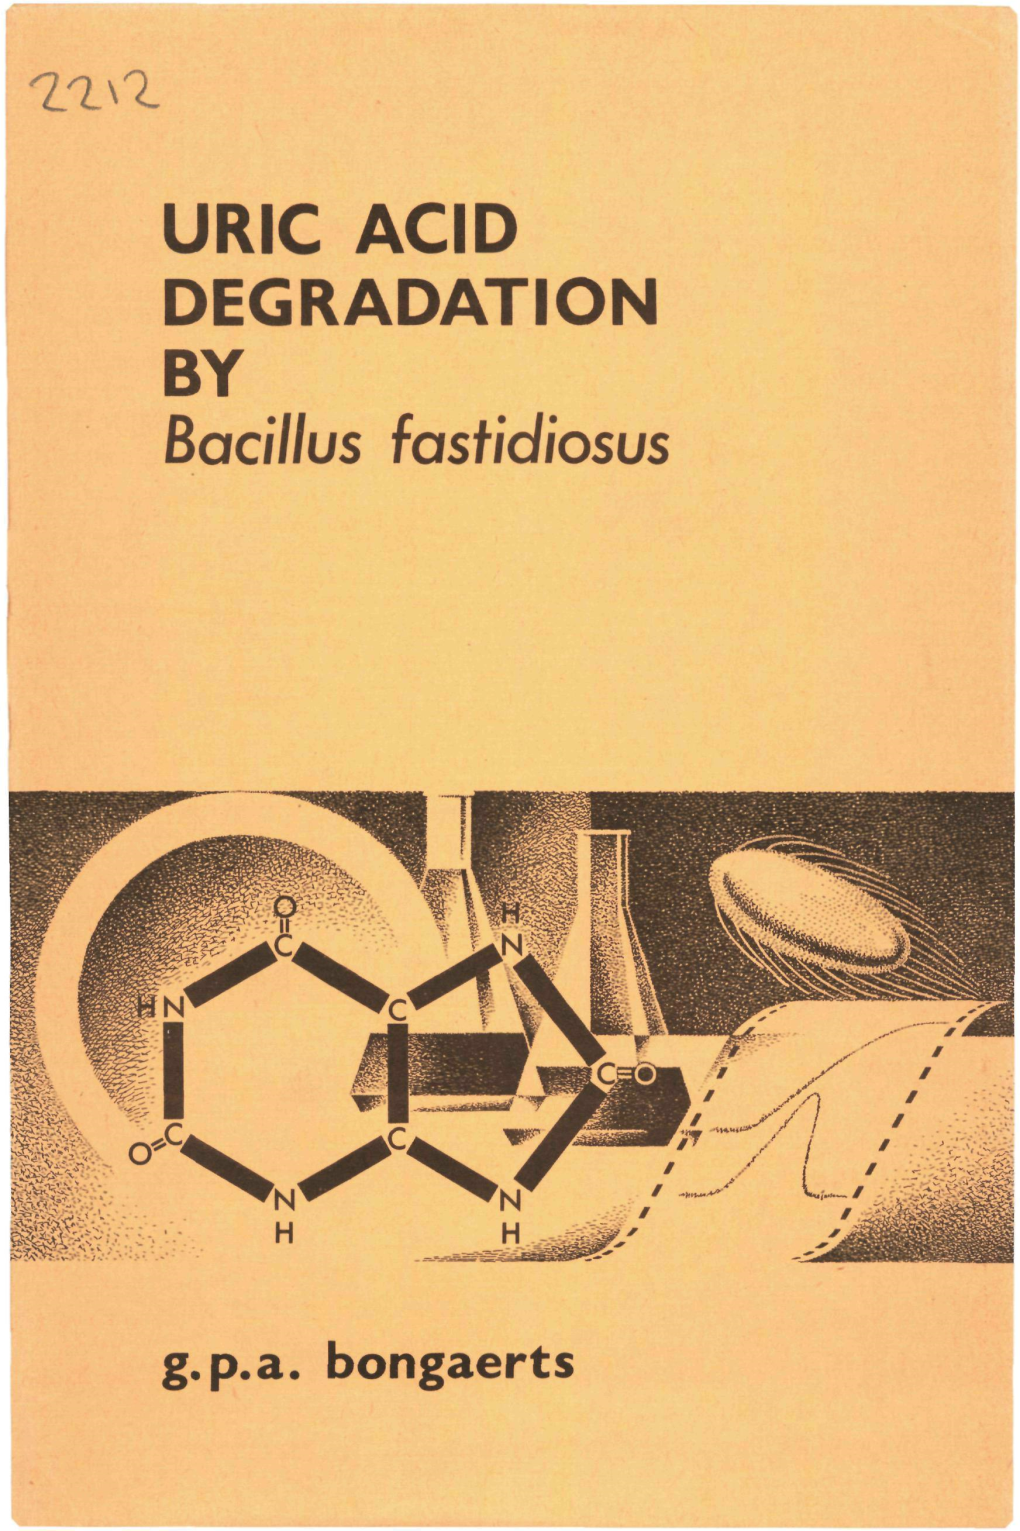 URIC ACID DEGRADATION by ßac/7/Us Fastidiosus